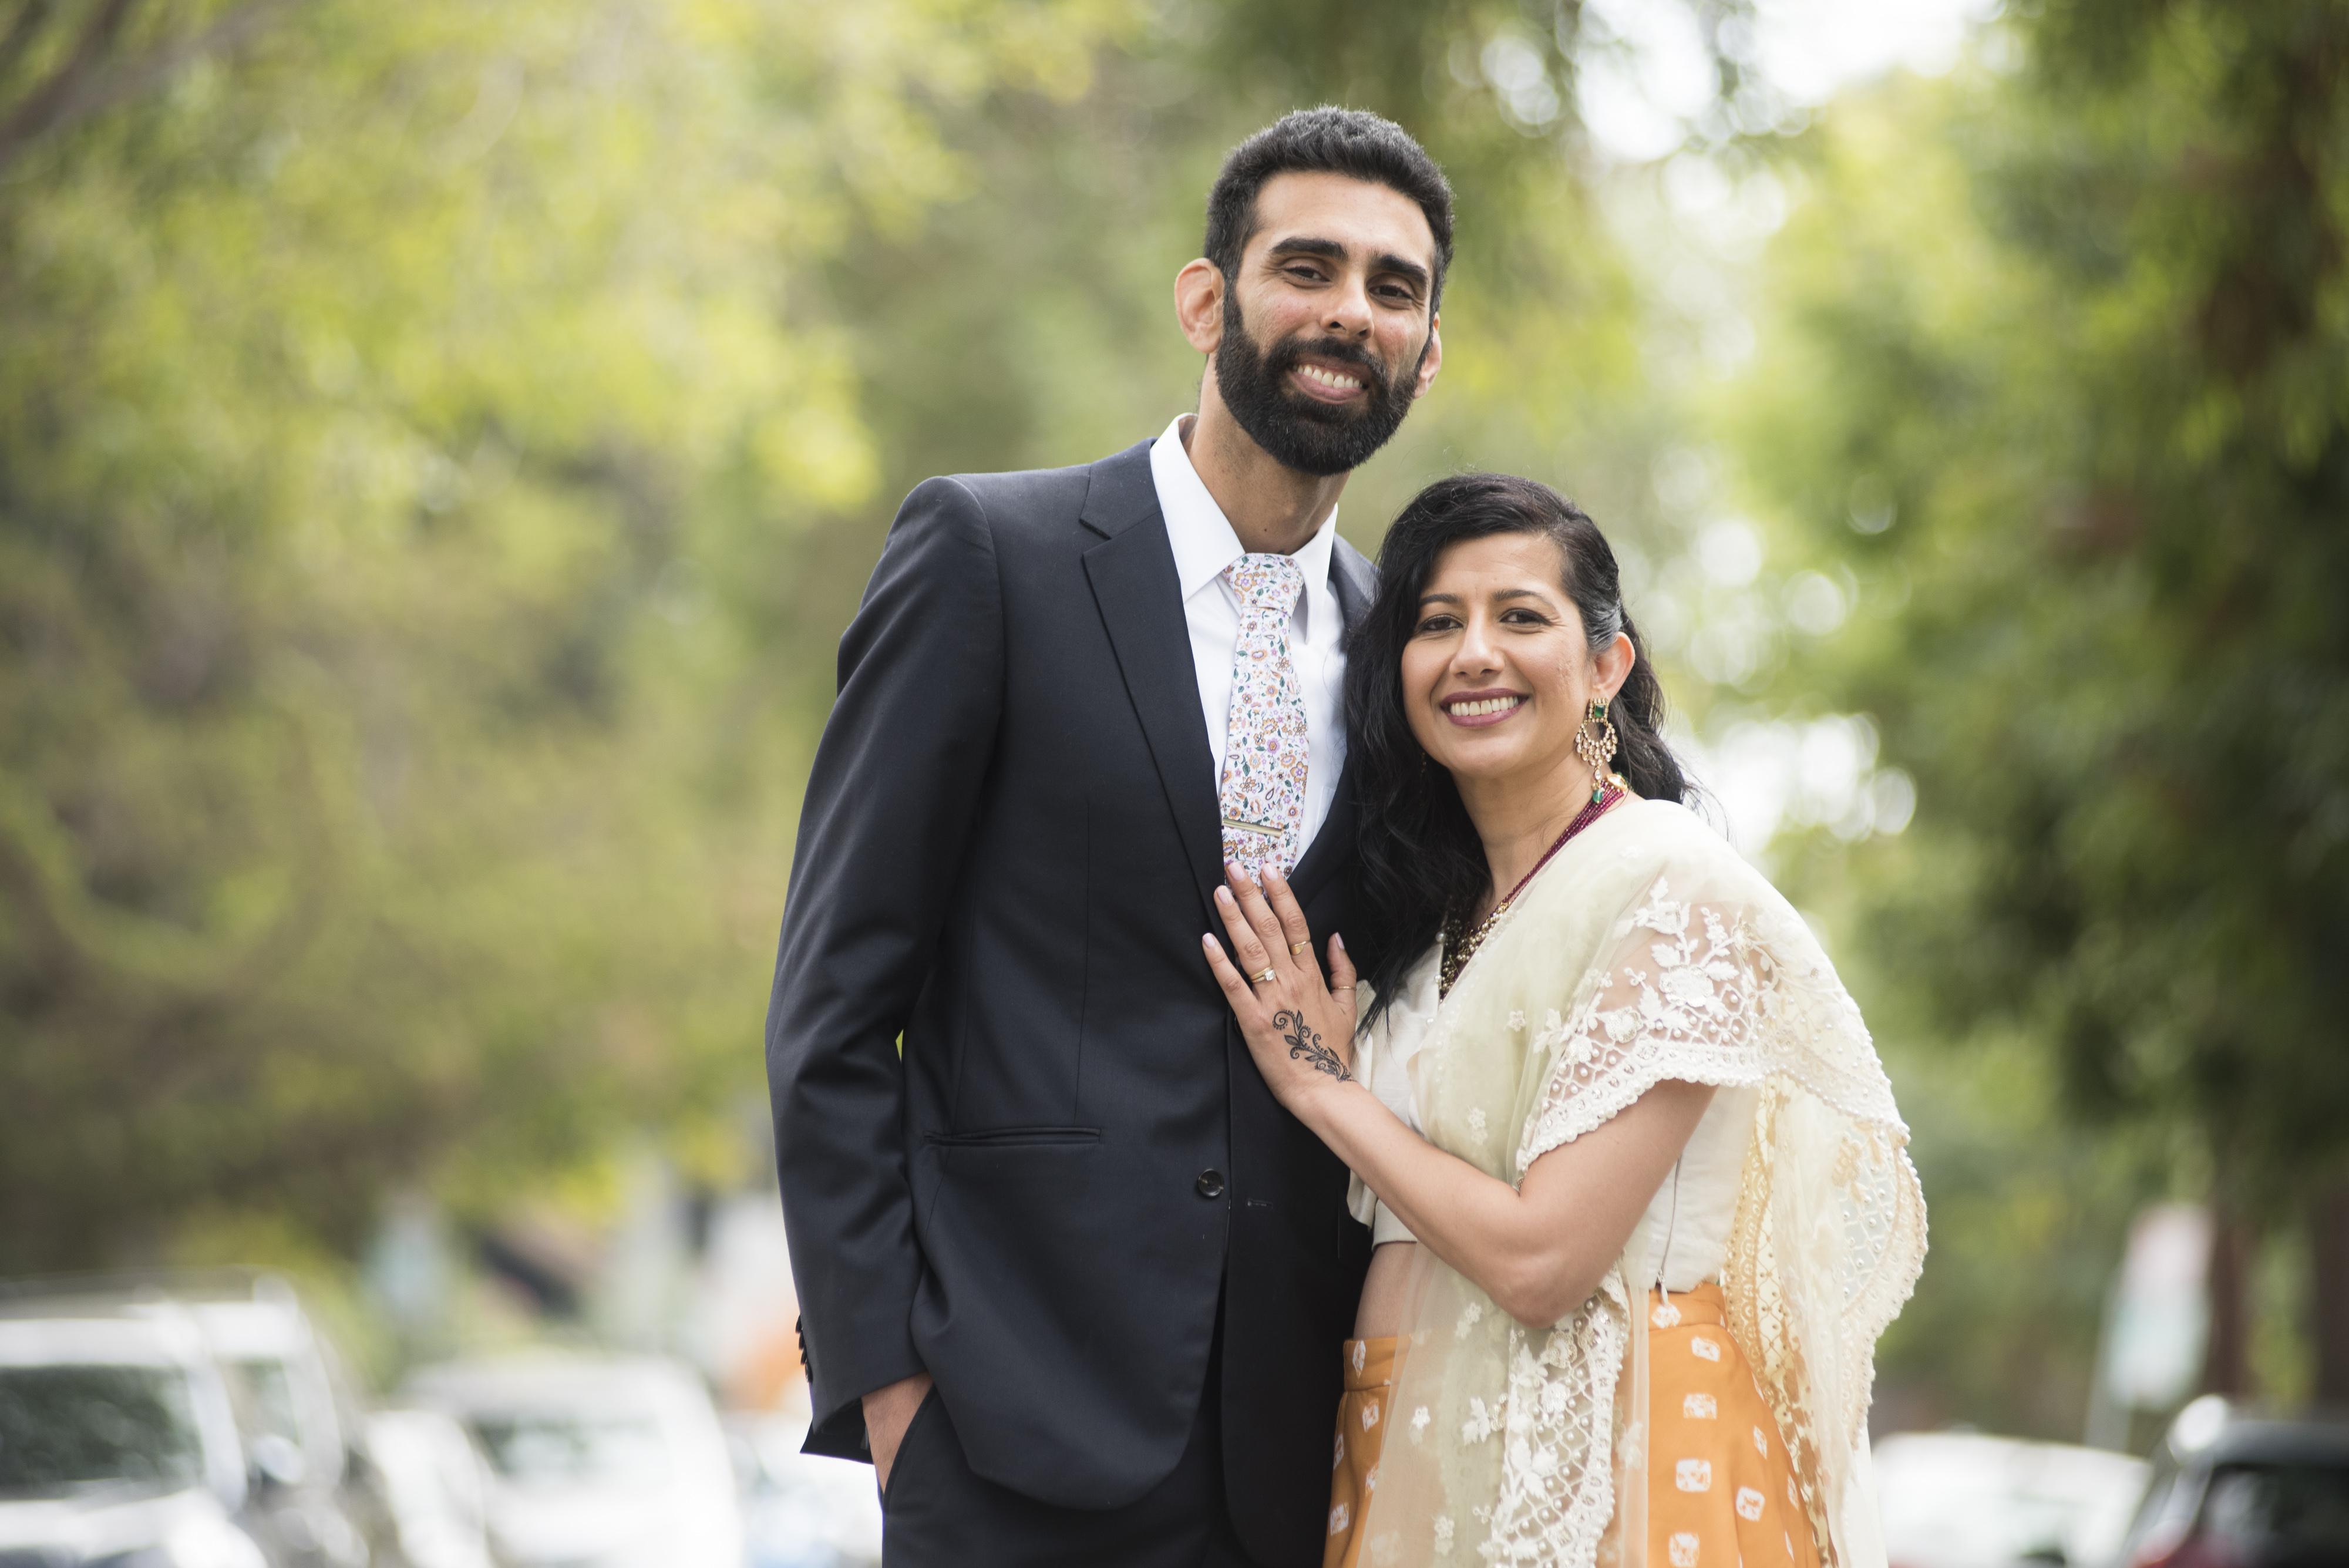 The Wedding Website of Sonali Kothari and Sachin Ganpule